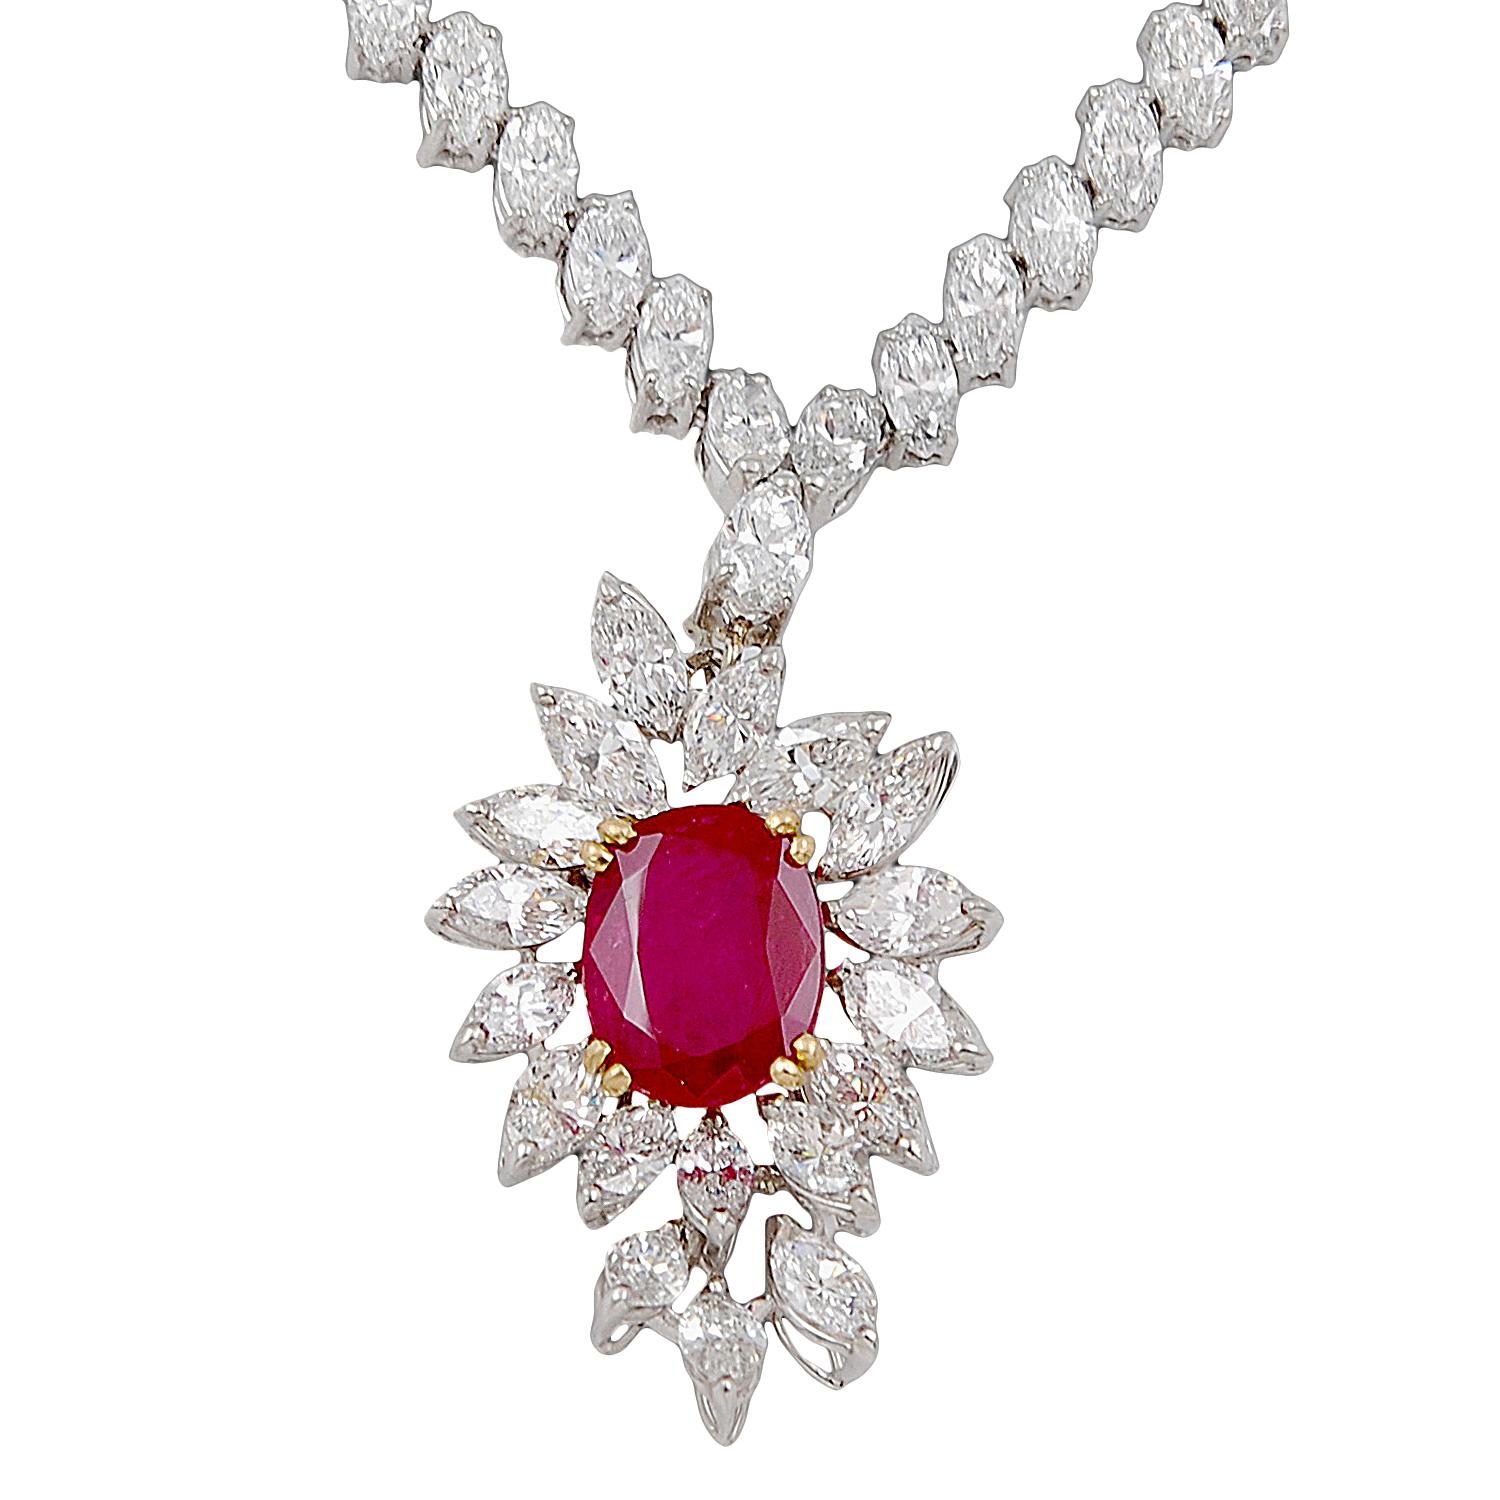 Boucheron Paris Vintage 5,27 Karat Rubin Diamant Halskette
ca. 26 Karat Diamanten und 5,27 Karat Rubin
ca. 1970er Jahre
